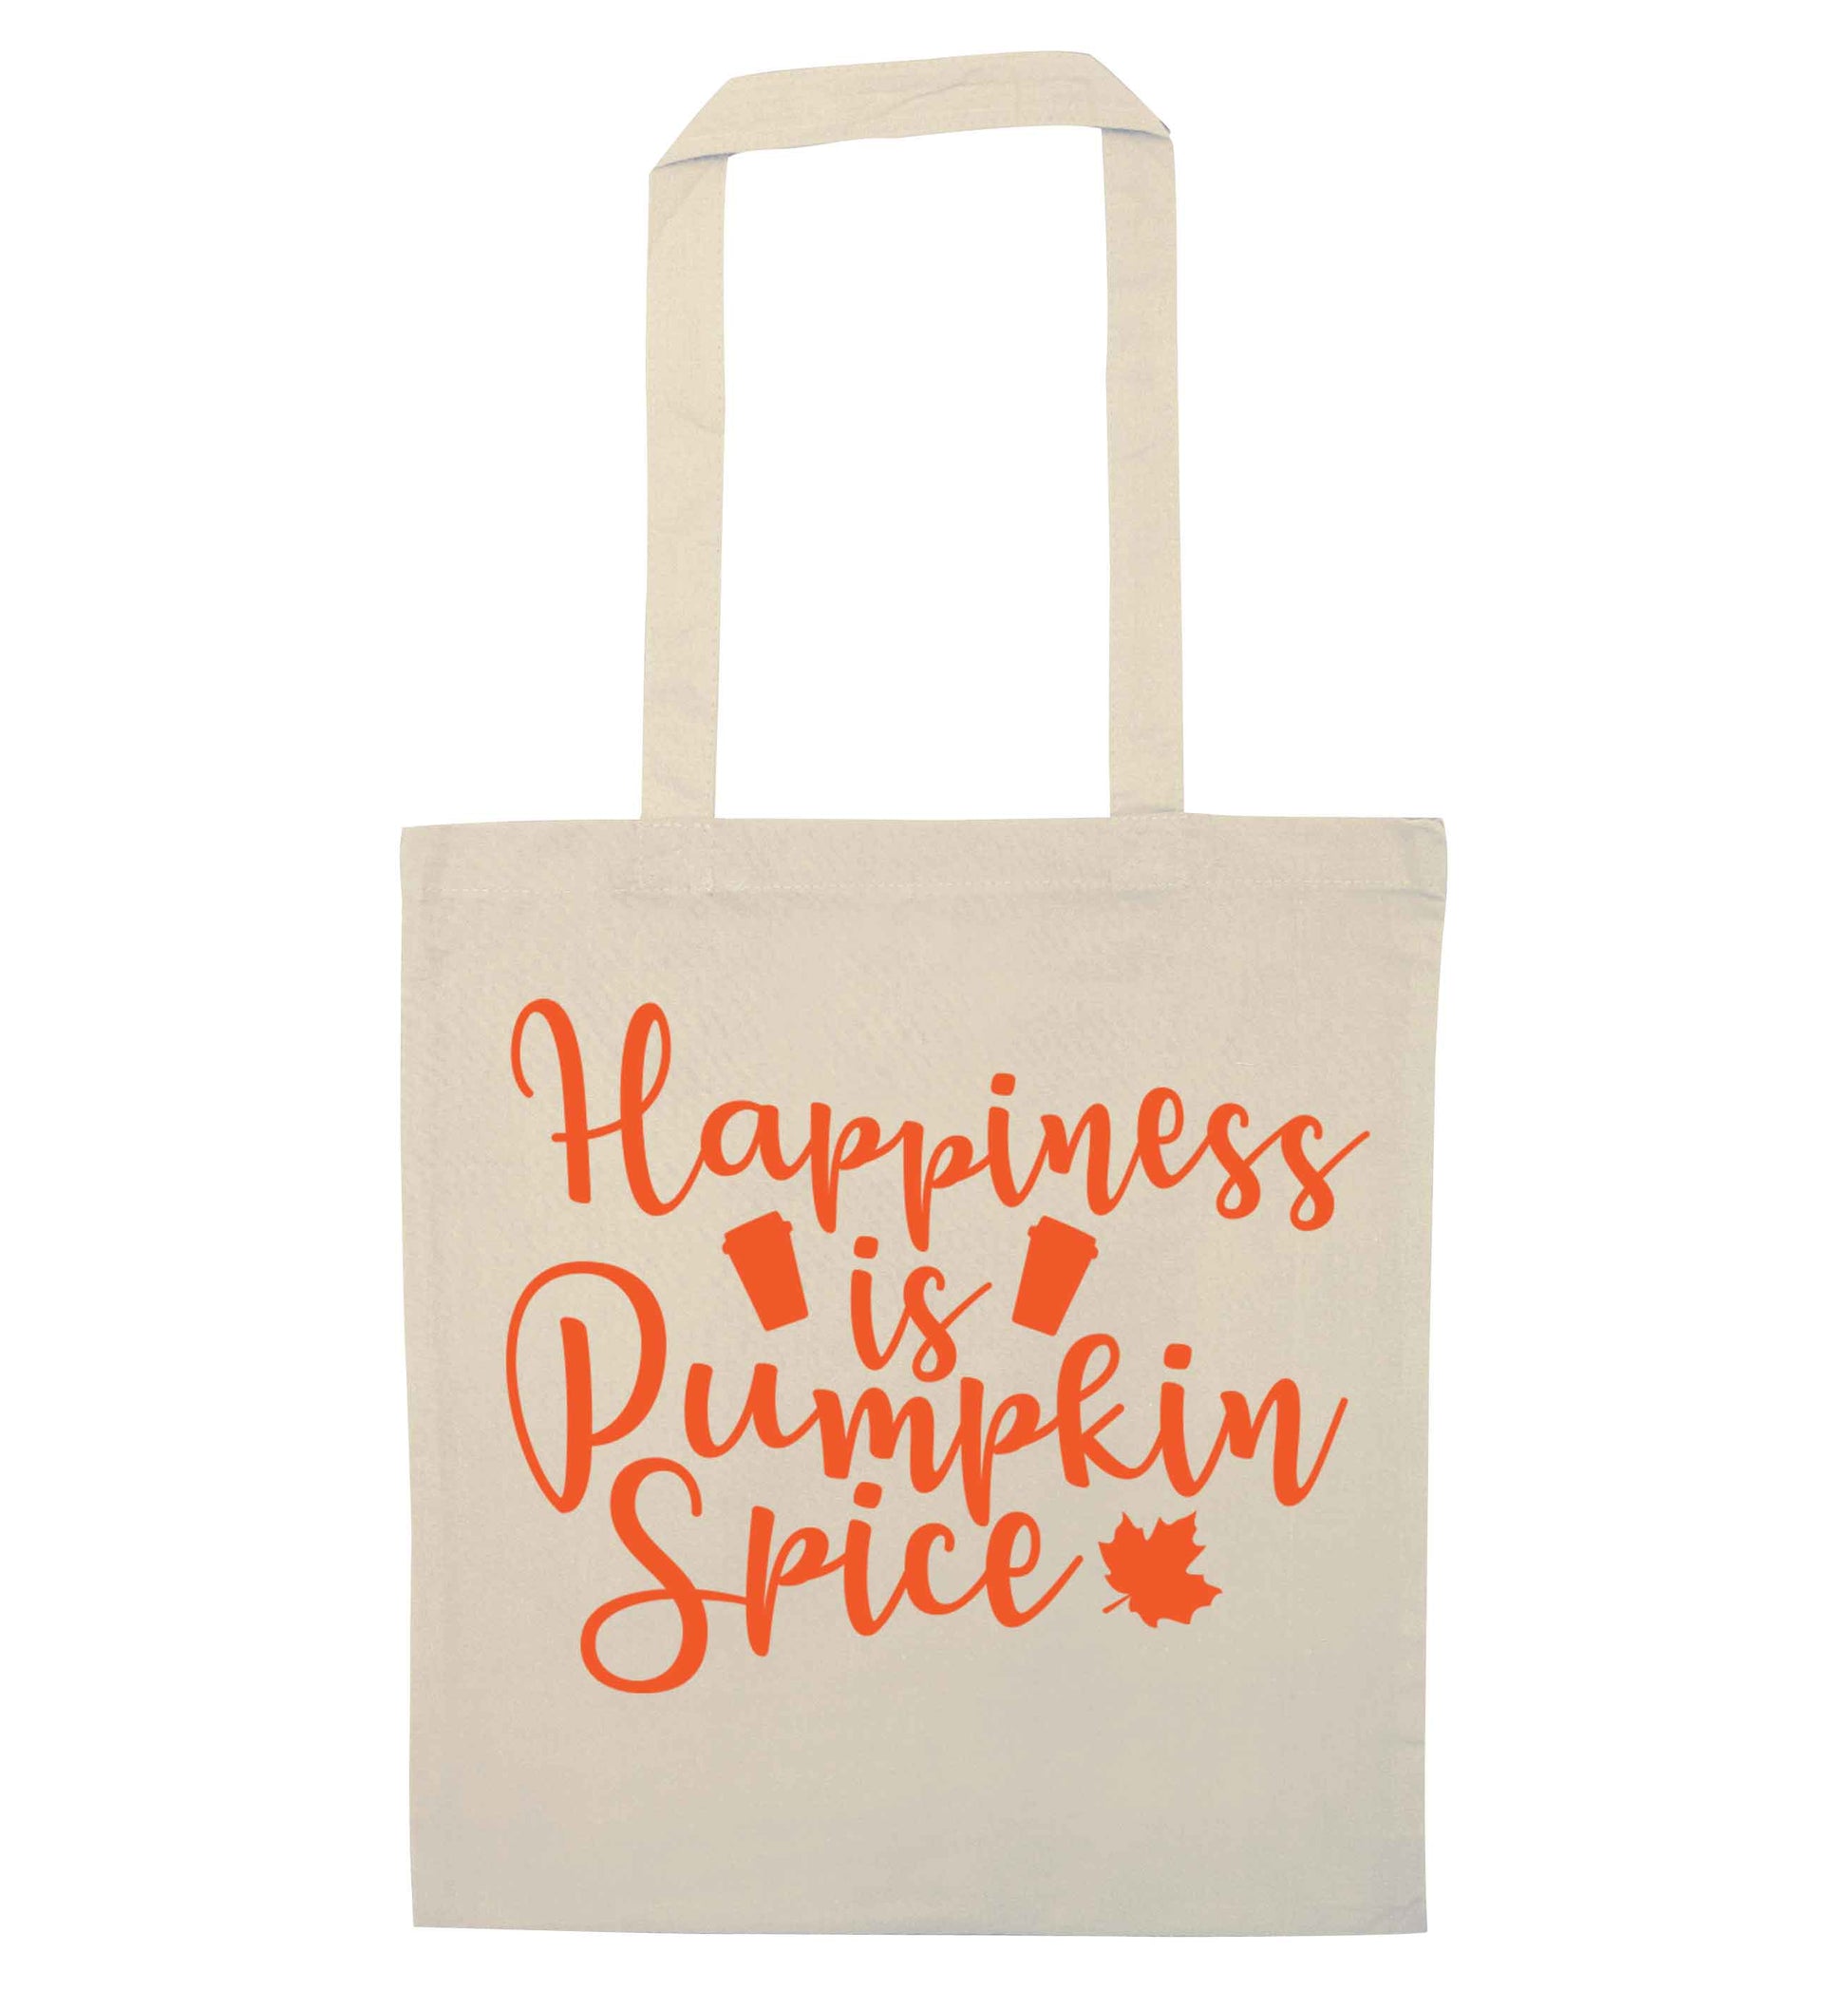 Happiness Pumpkin Spice natural tote bag